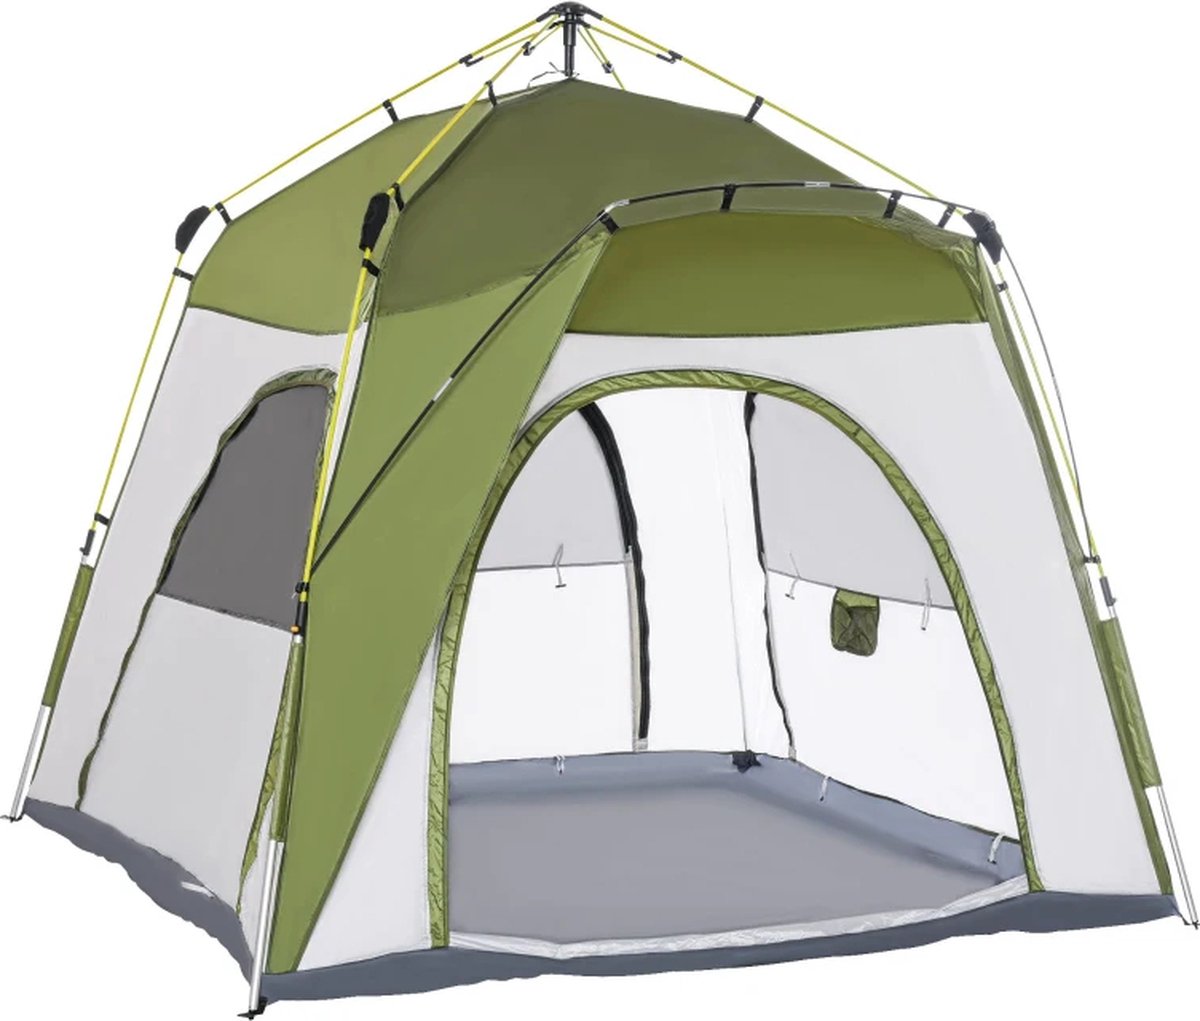 Laodikya Home -Familie Tent - 4-Persoons Tent - met Venster - Eenvoudige Opstelling - Groen Grijs 240x240x195cm